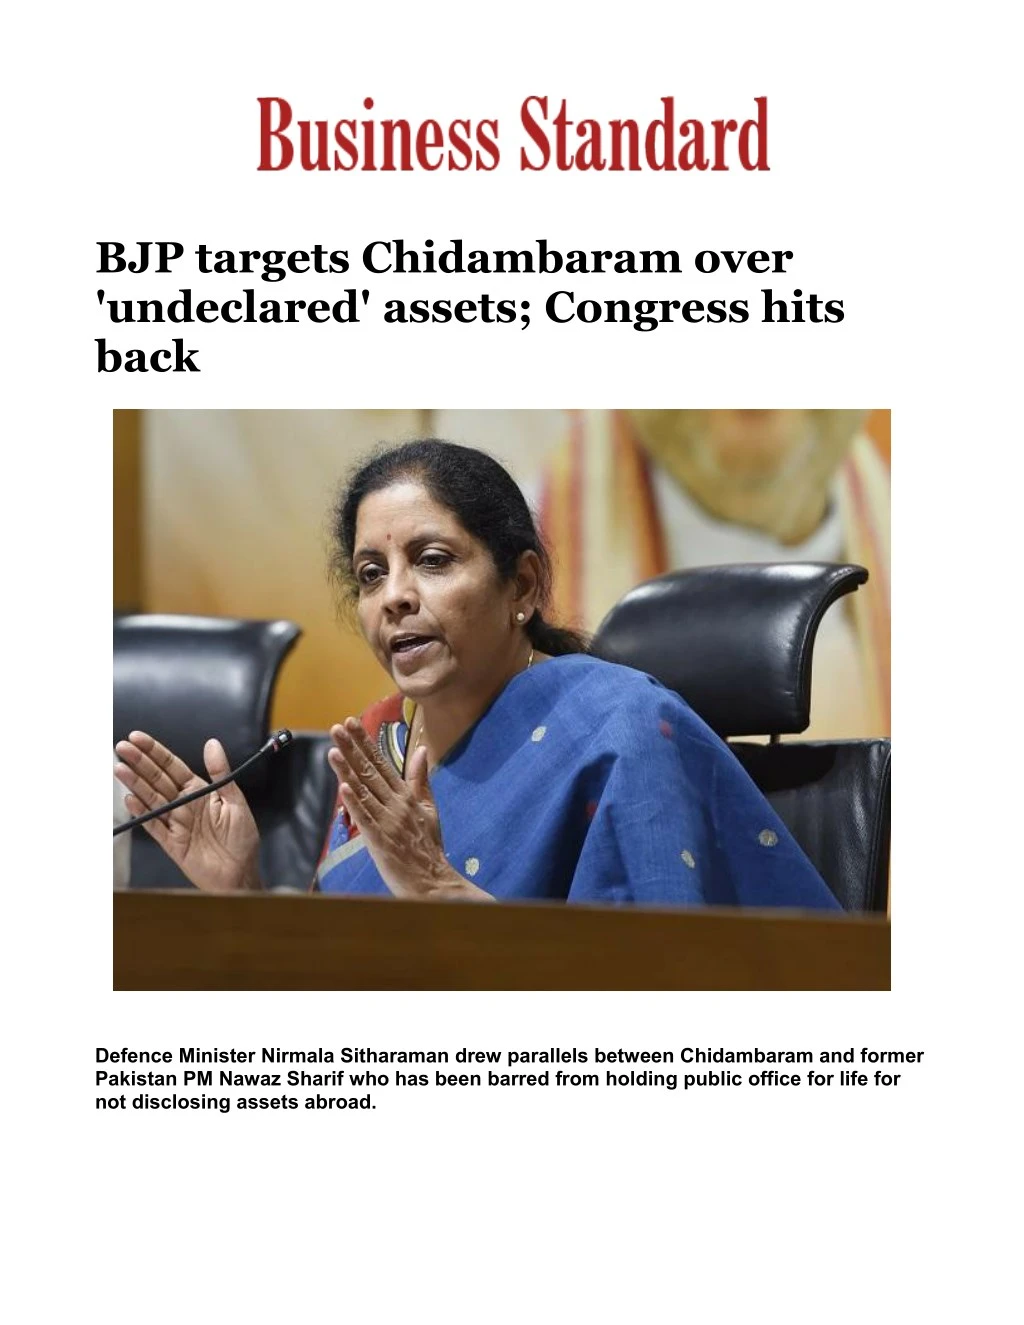 bjp targets chidambaram over undeclared assets